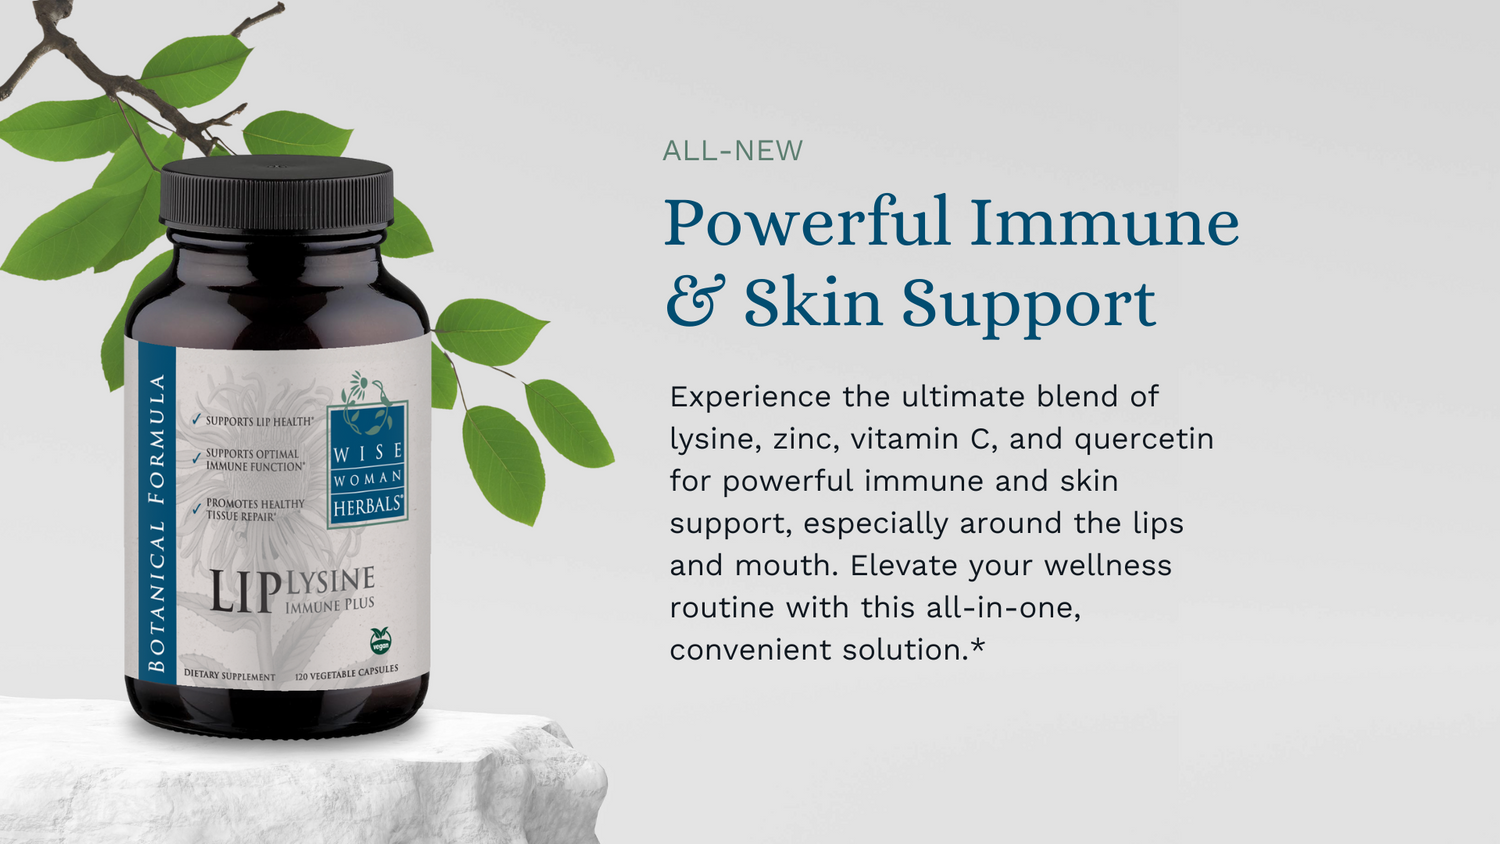 All New Powerful Immune & Skin Support. Lysine Immune Plus.